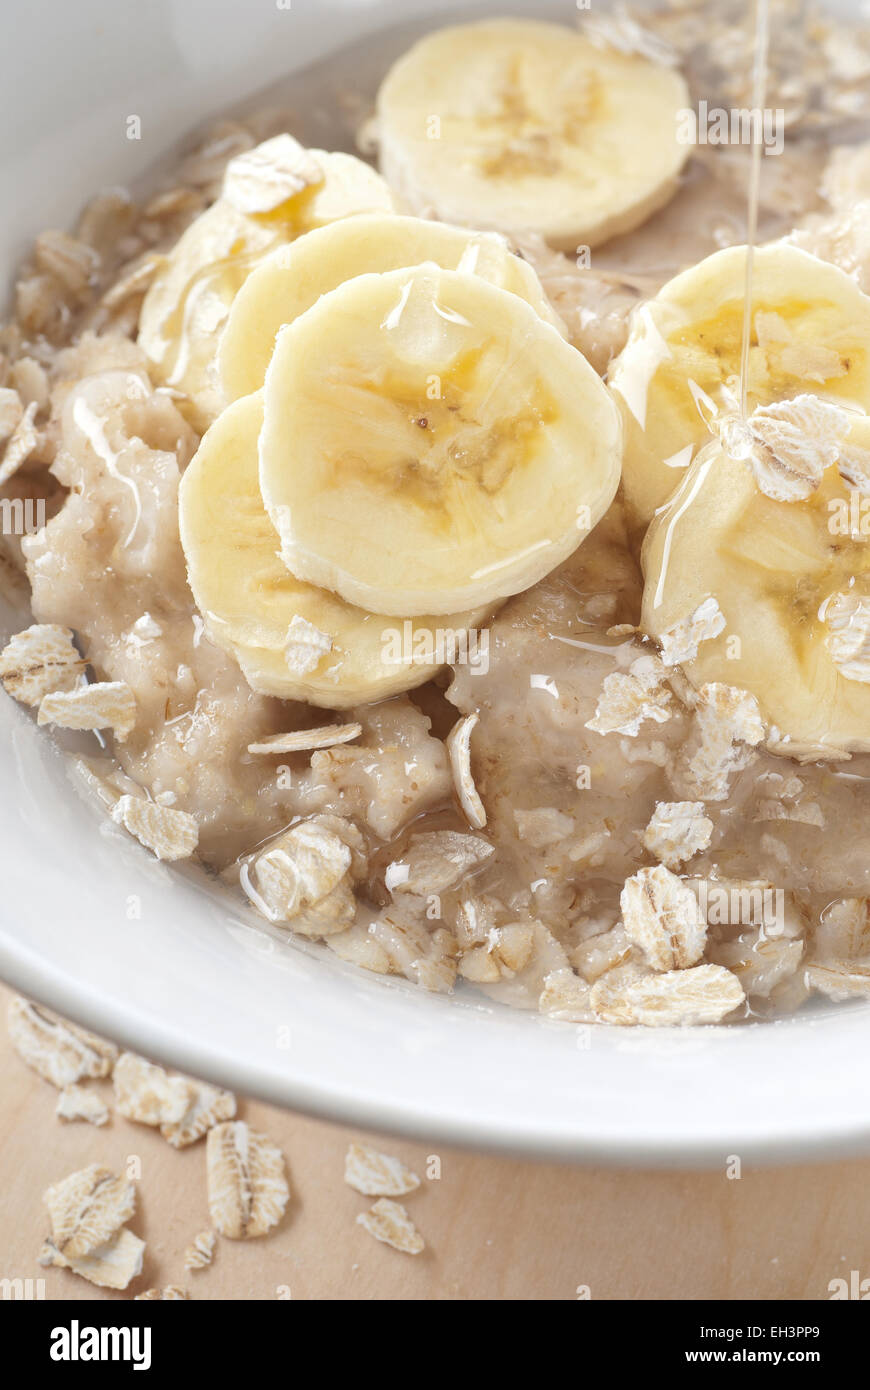 A bowl of oatmeal porridge with sliced banana. Stock Photo